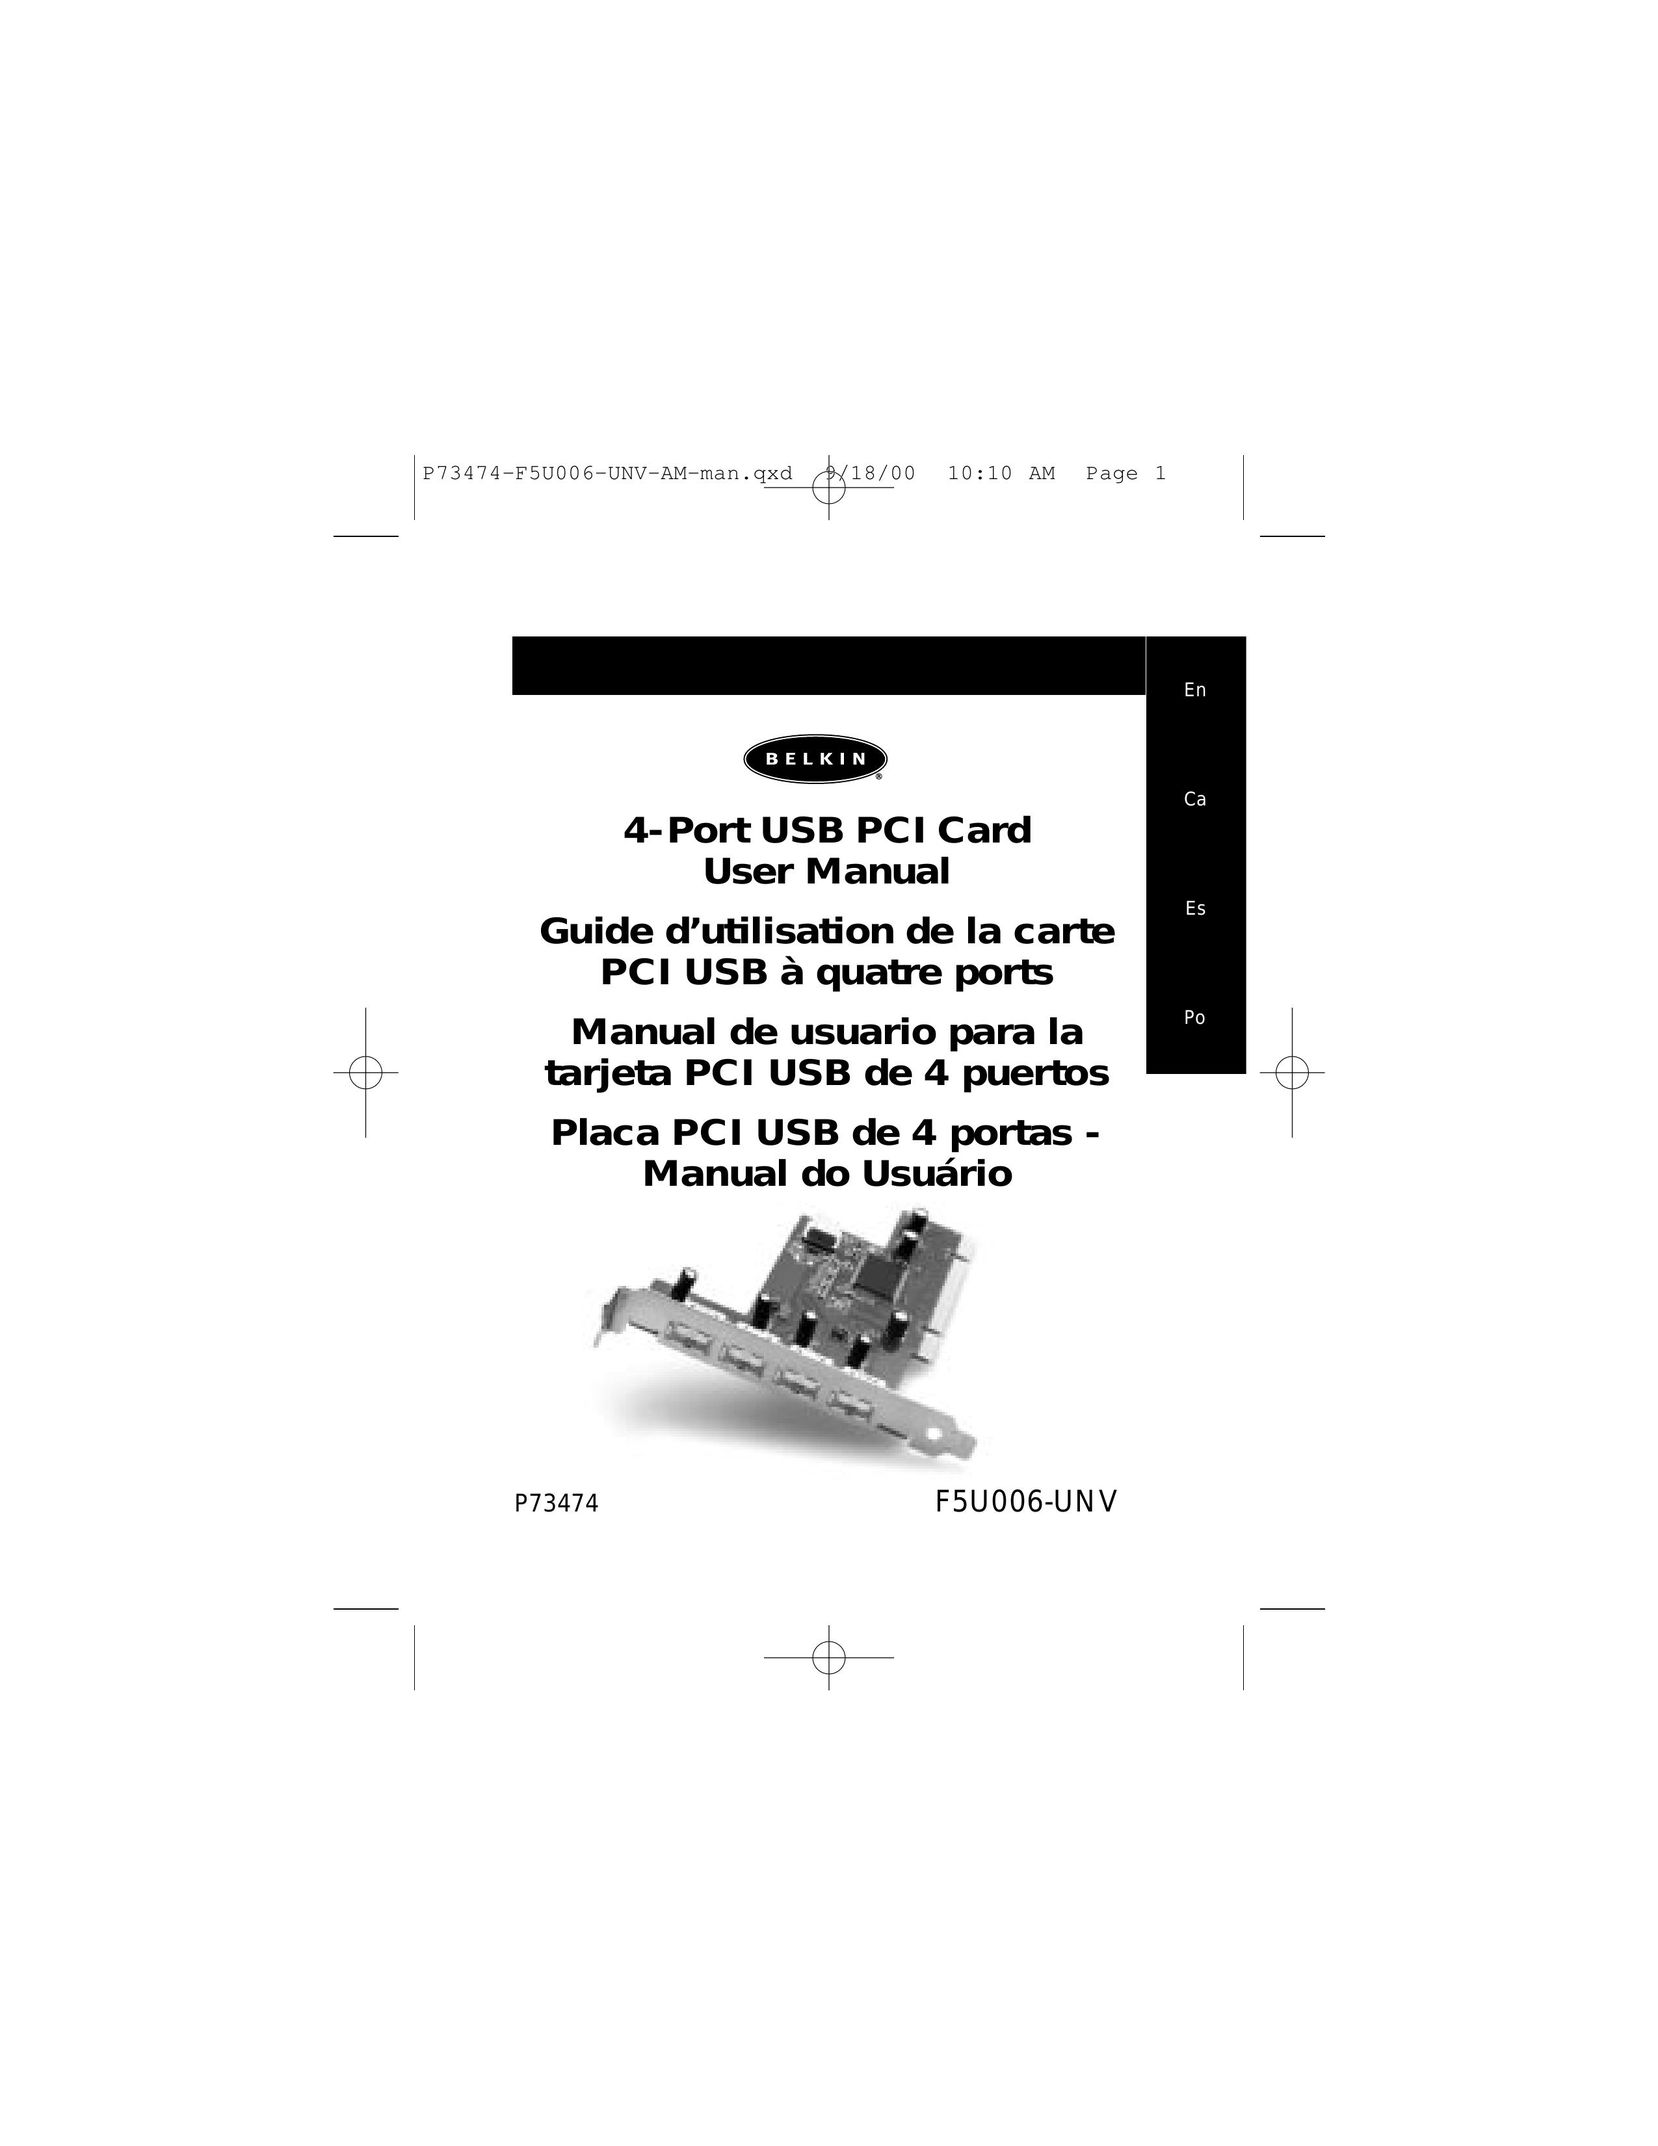 Belkin P73474 Computer Hardware User Manual